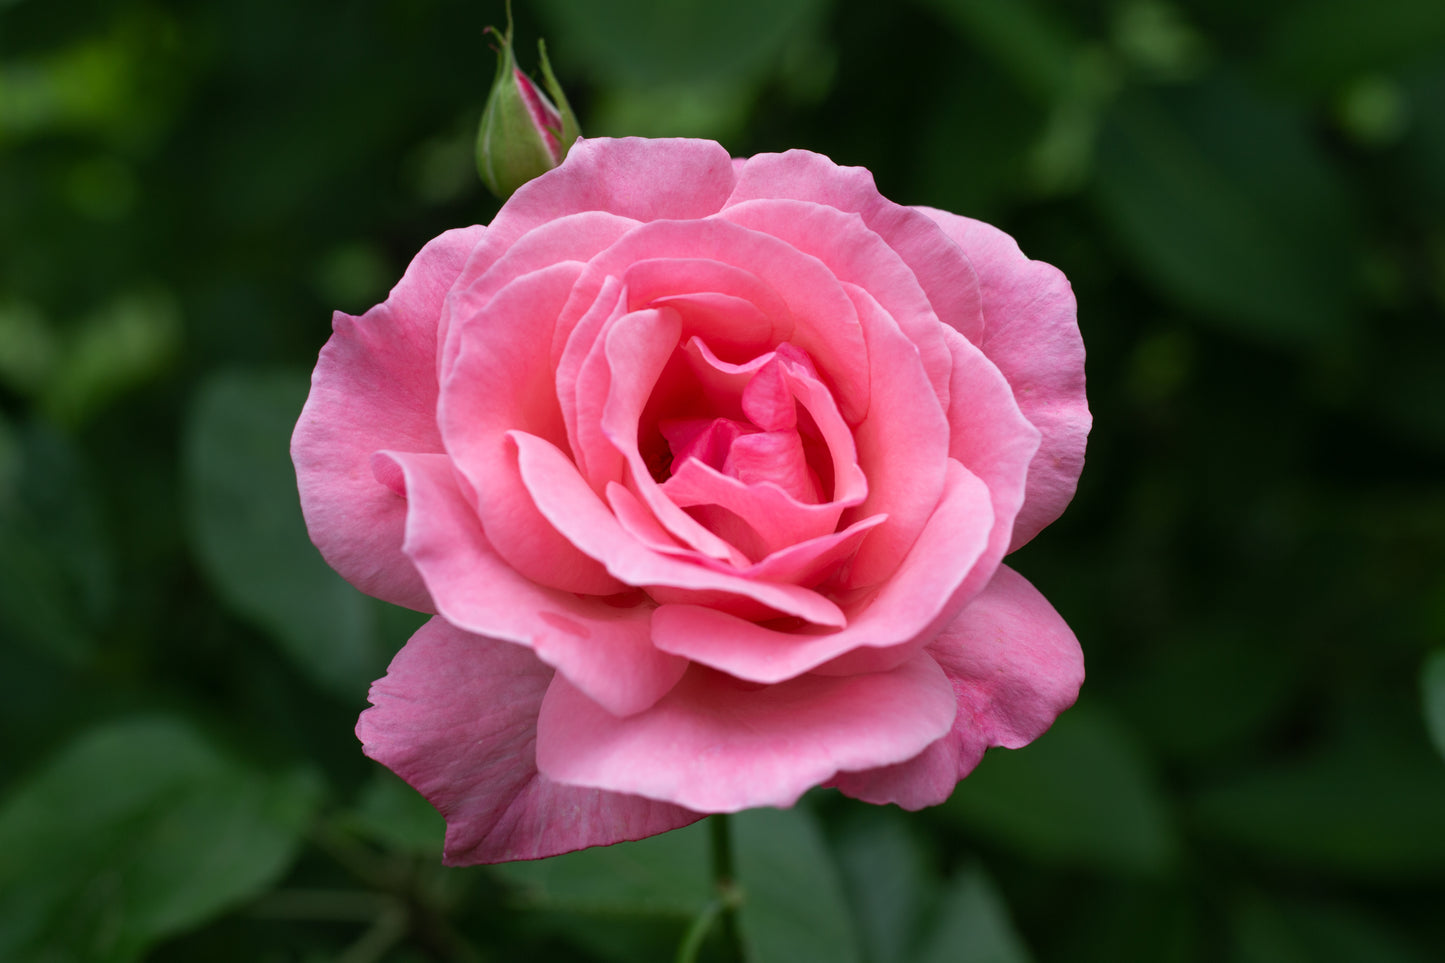 Rose Plants - Floribunda - 'Queen Elizabeth' - 1 x Full Plant in 5L Pot